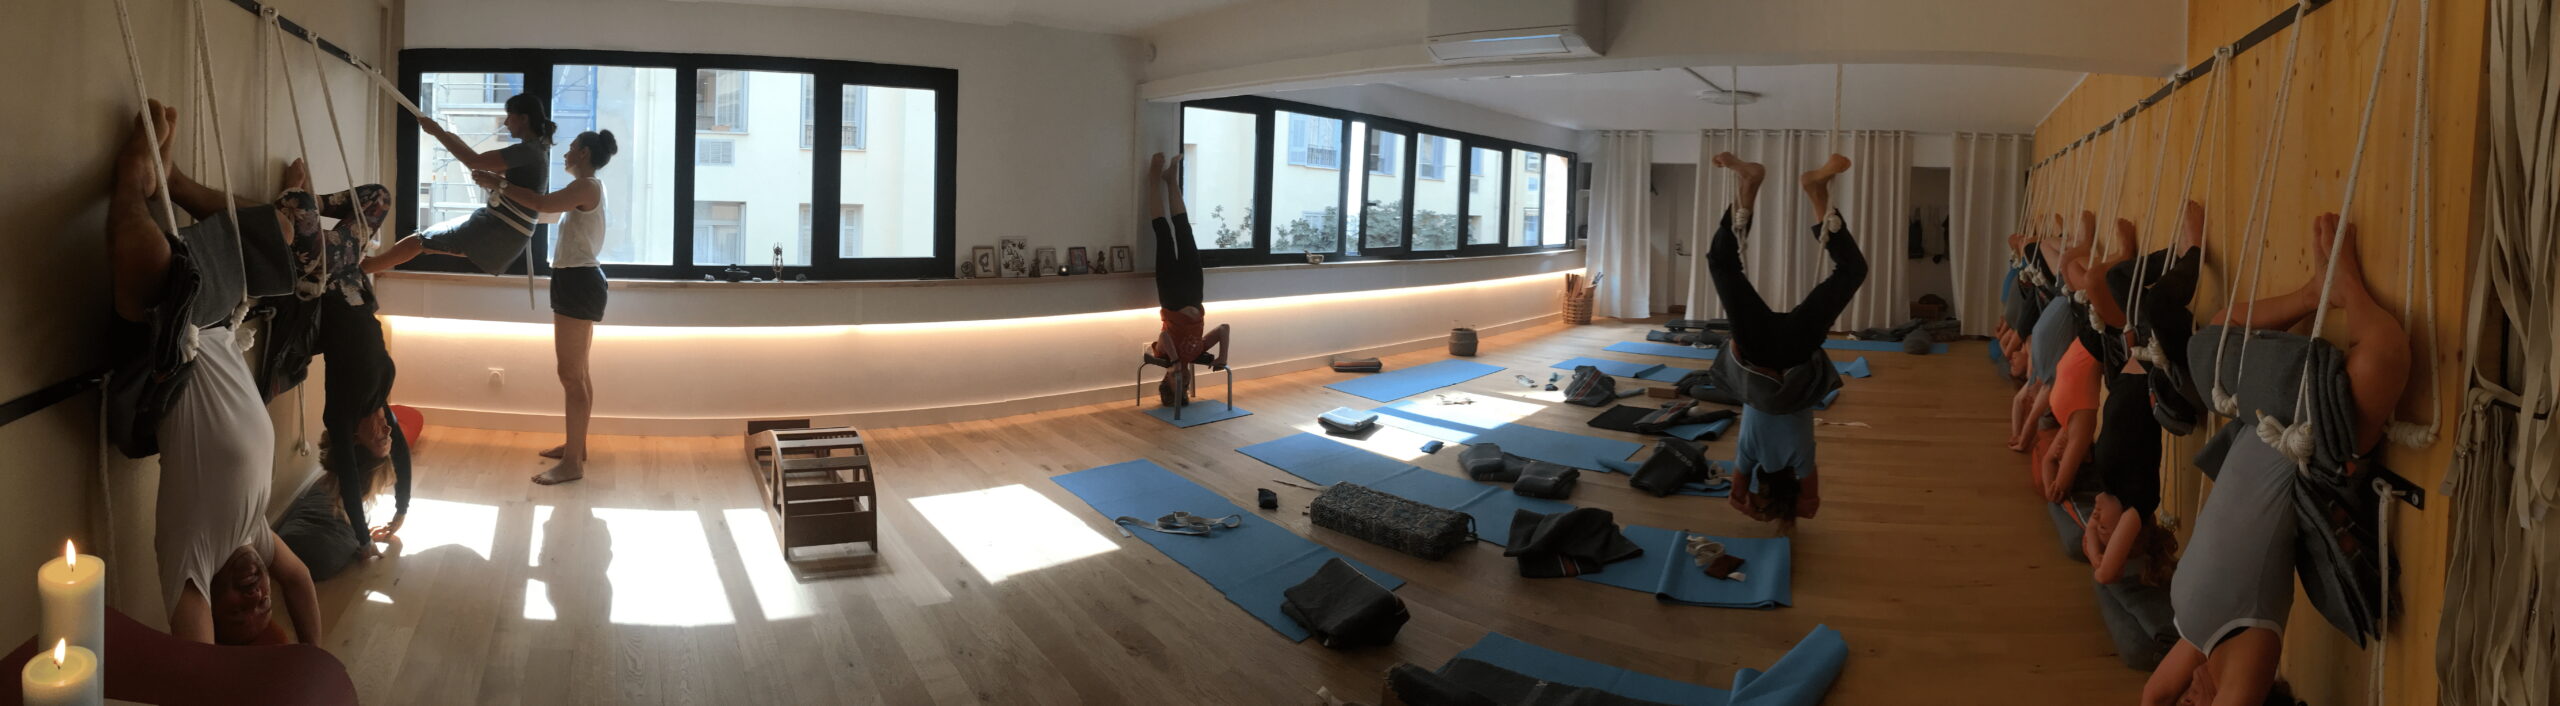 Salle du Centre Yoga Precision - vue panoramique